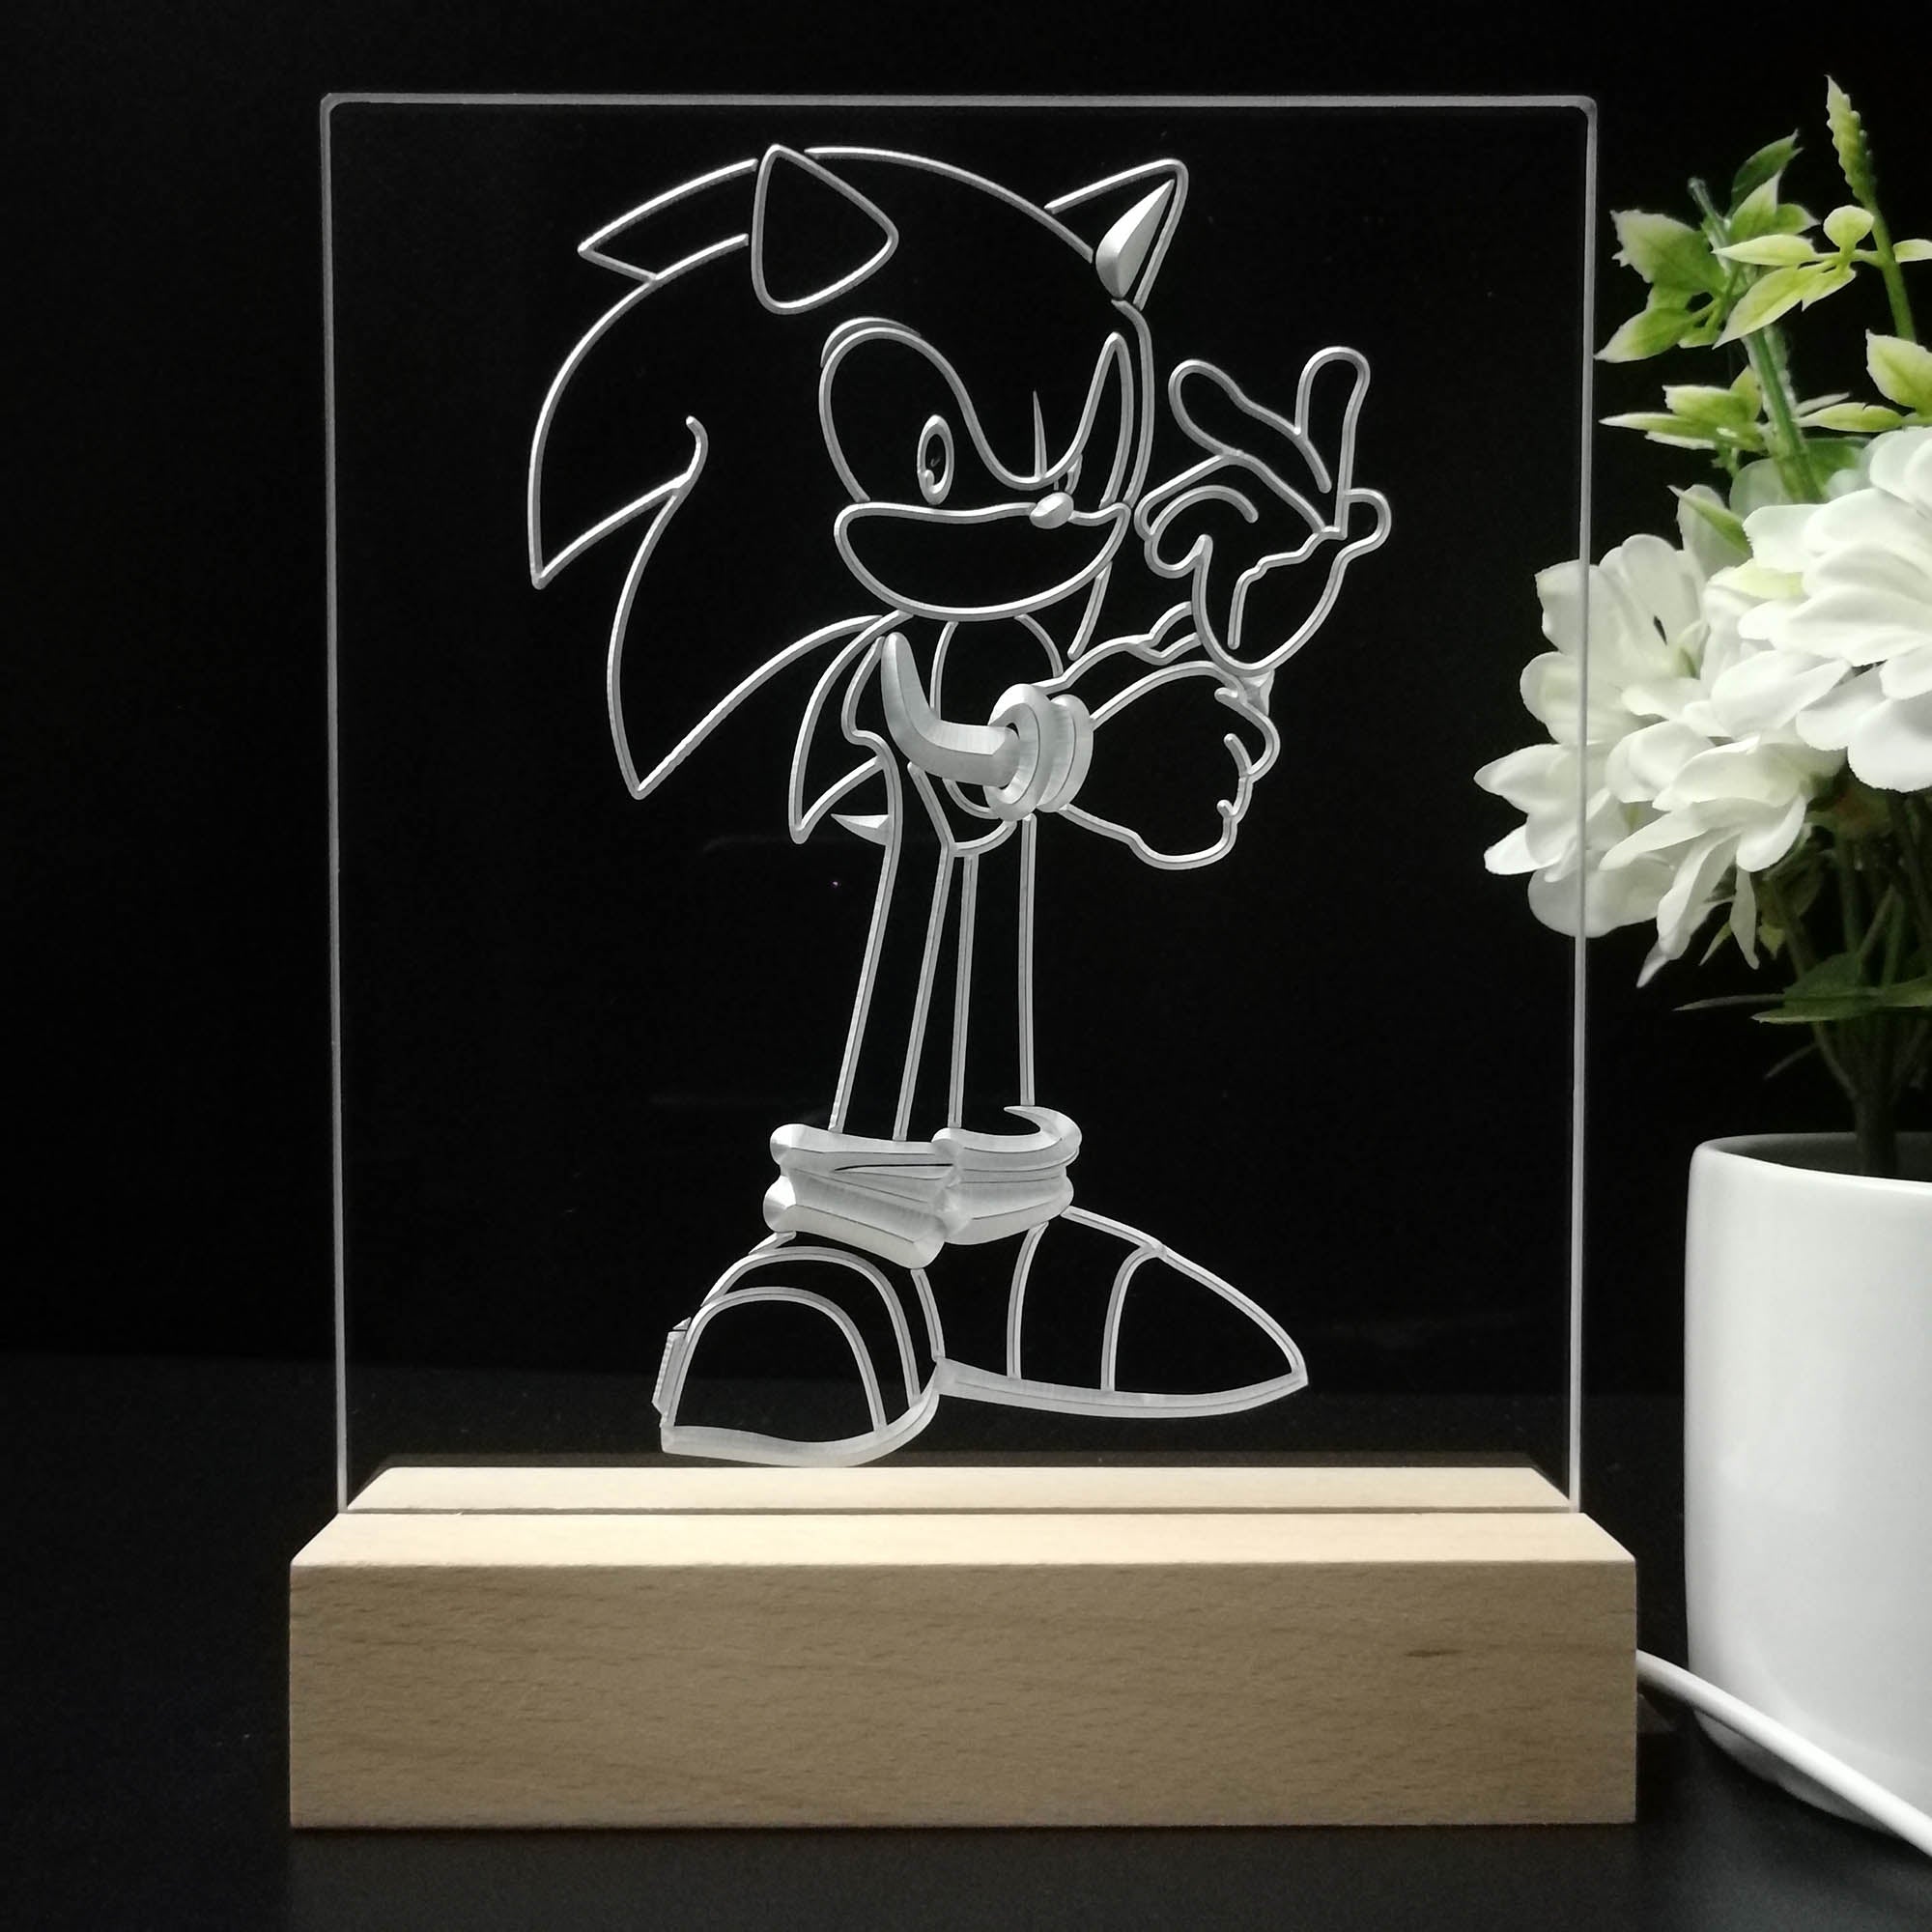 Sonic the Hedgehog 3D Neon LED Night Light Sign